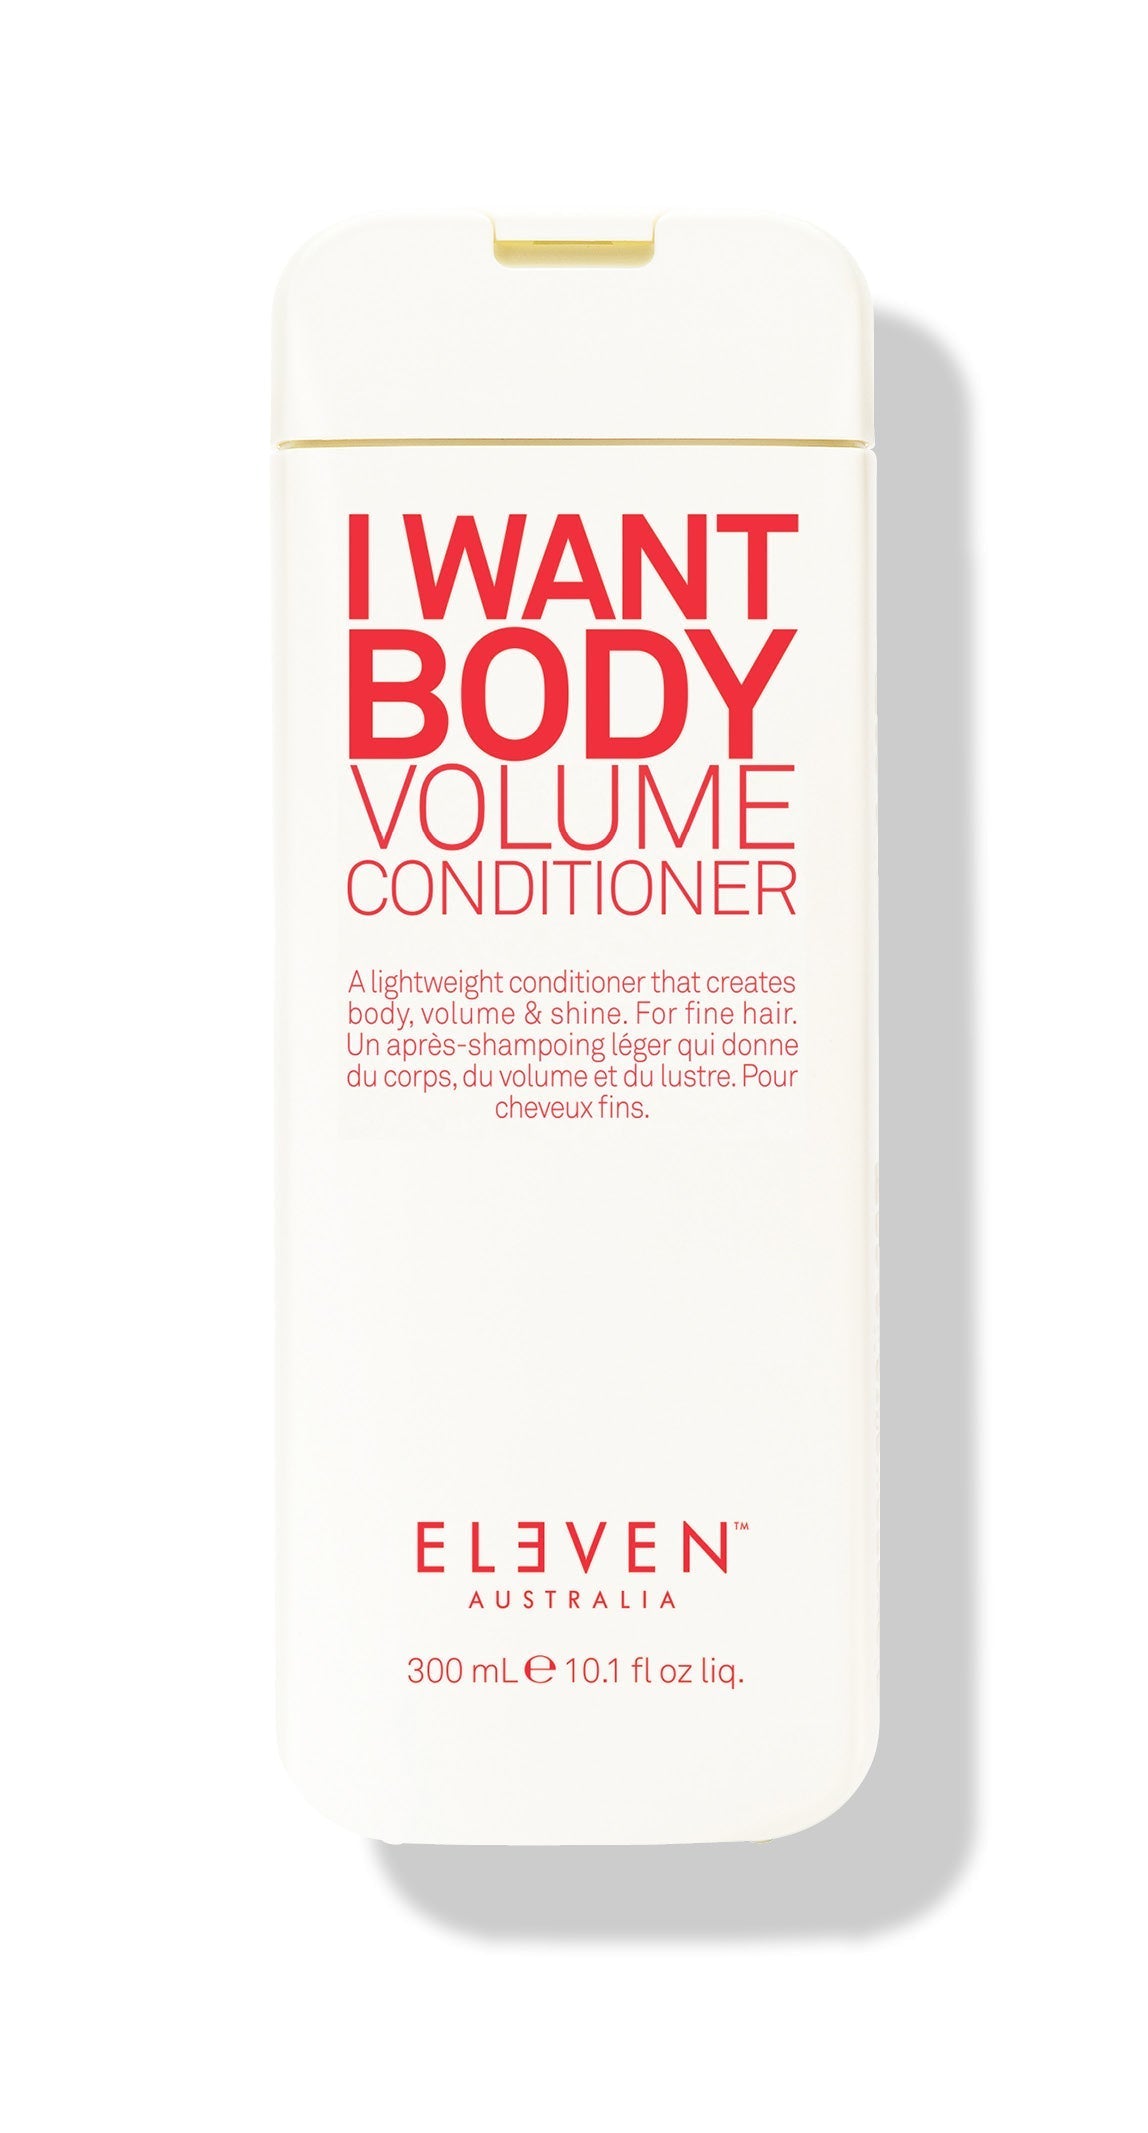 I Want Body Volume Conditioner - 300ml - ELEVEN Australia